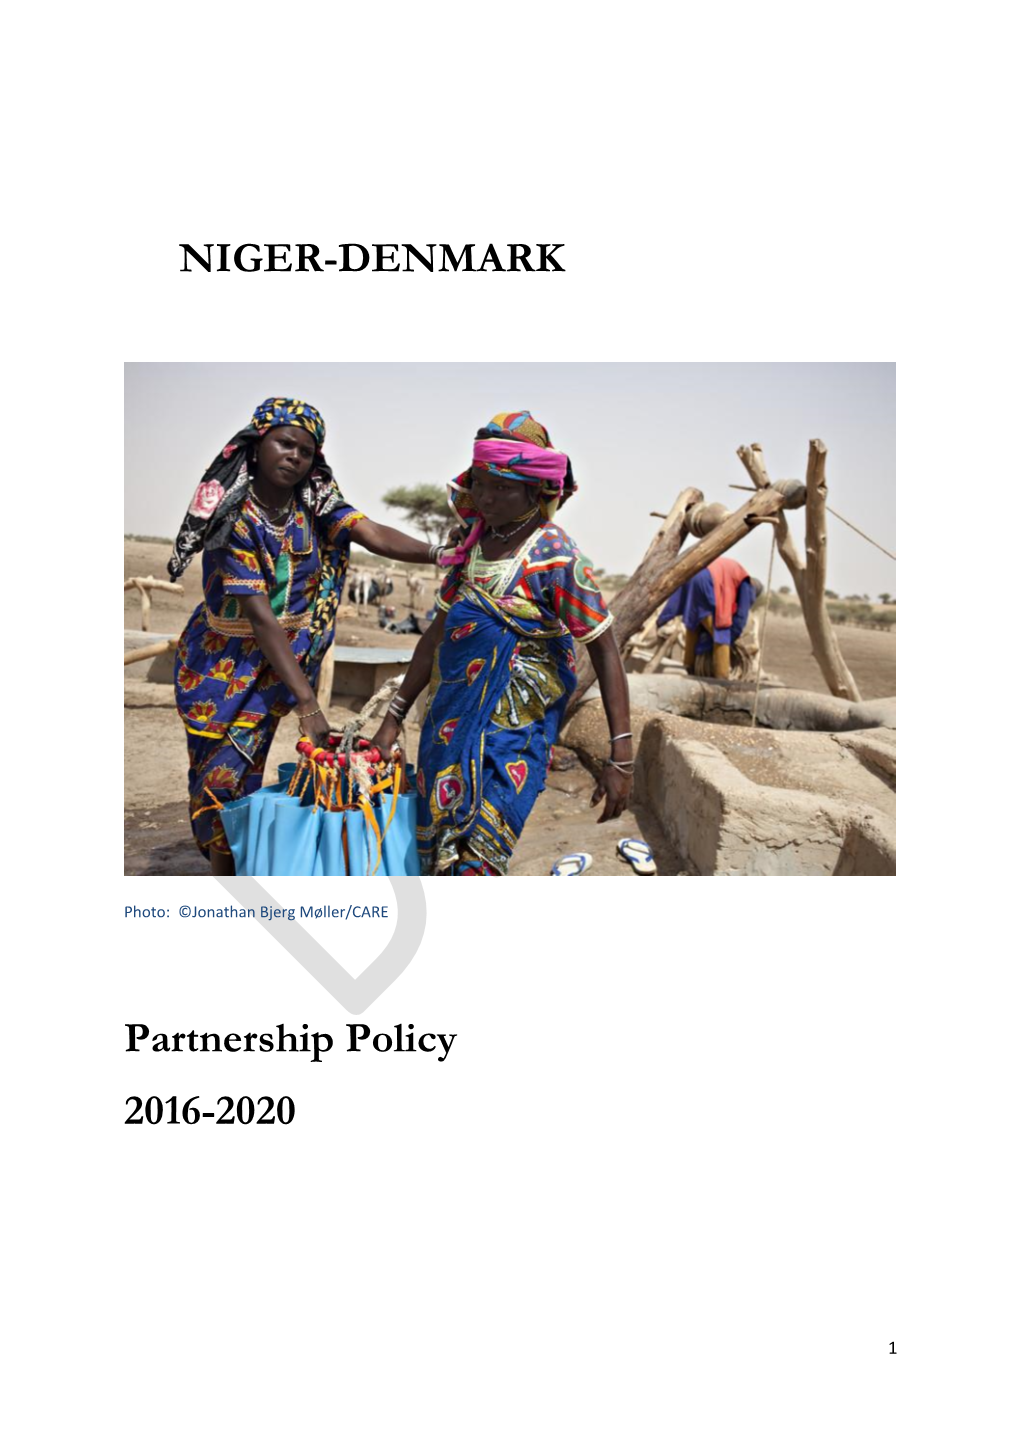 NIGER-DENMARK Partnership Policy 2016-2020